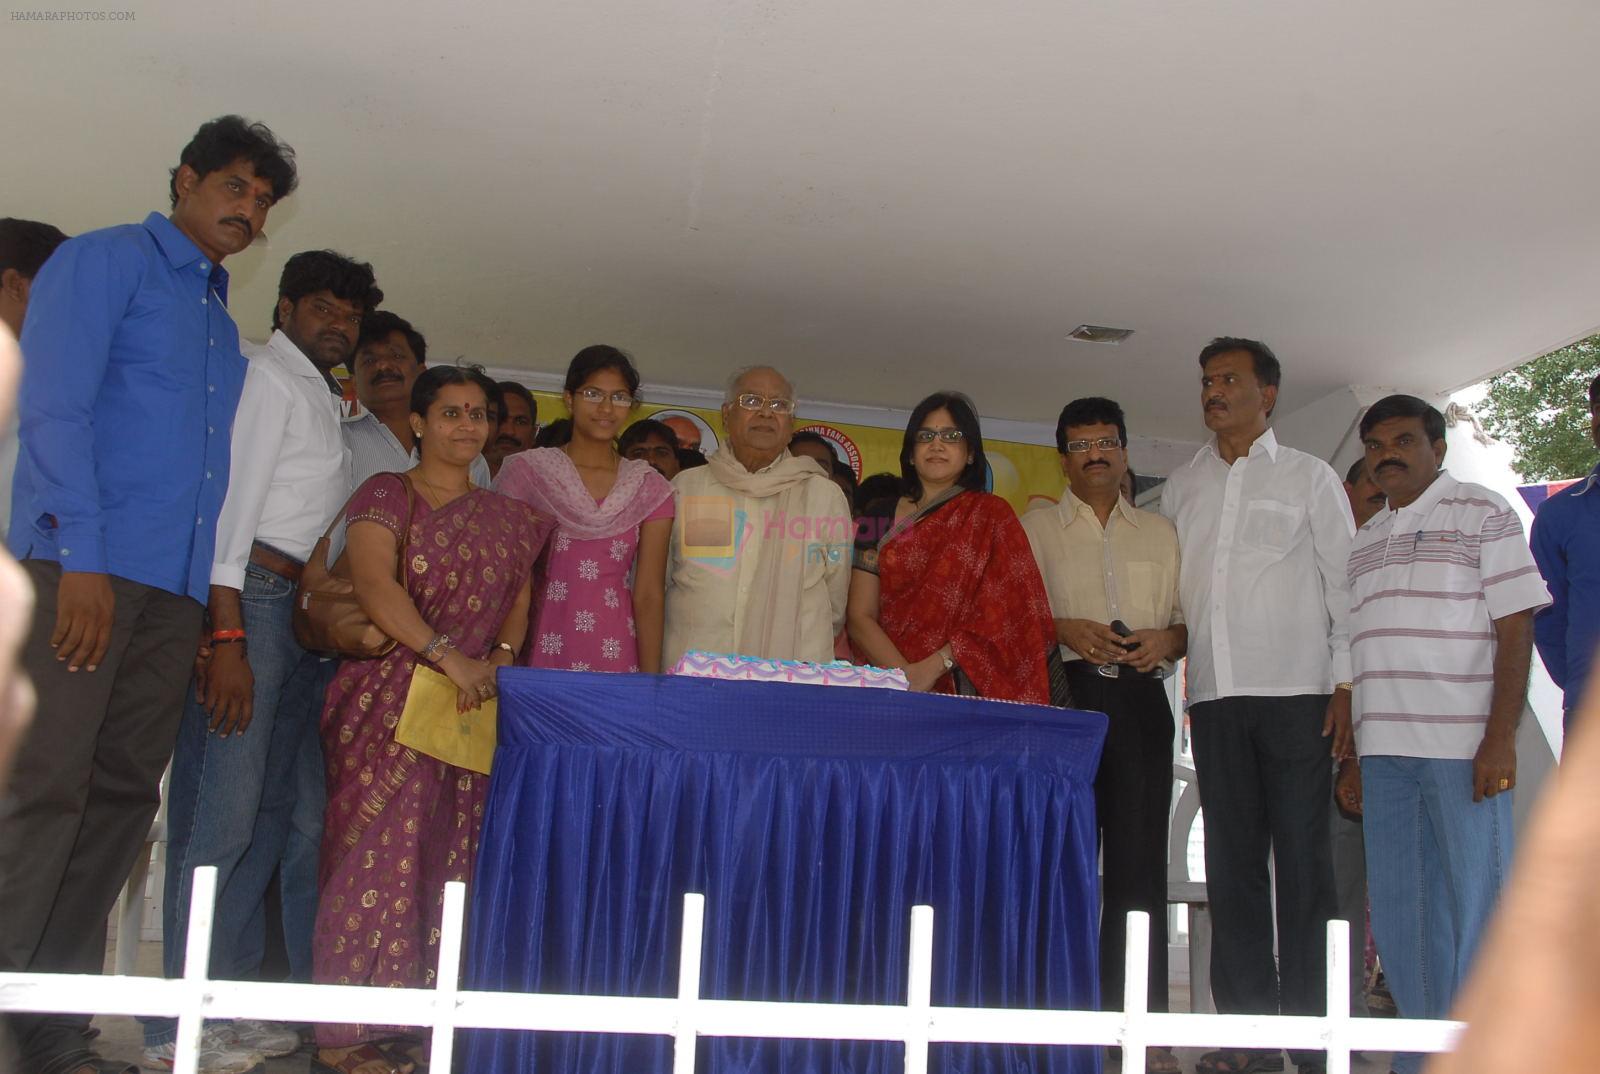 Nagarjuna Turns 52 - Birthday Celebrations on 29th August 2011